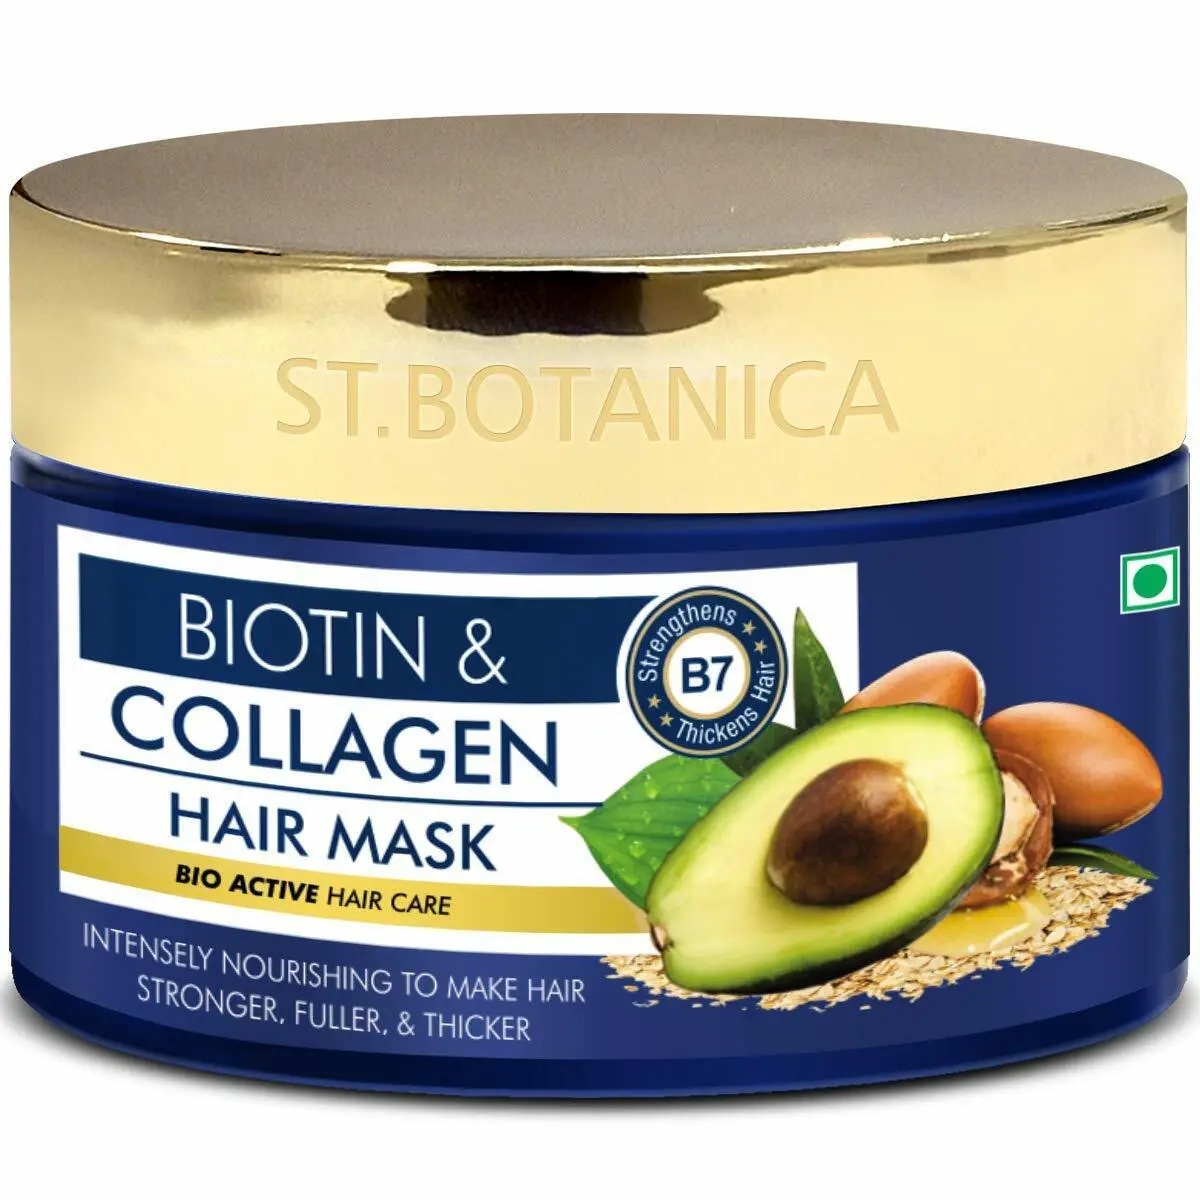 St. Botanica Biotin And Collagen Hair Mask